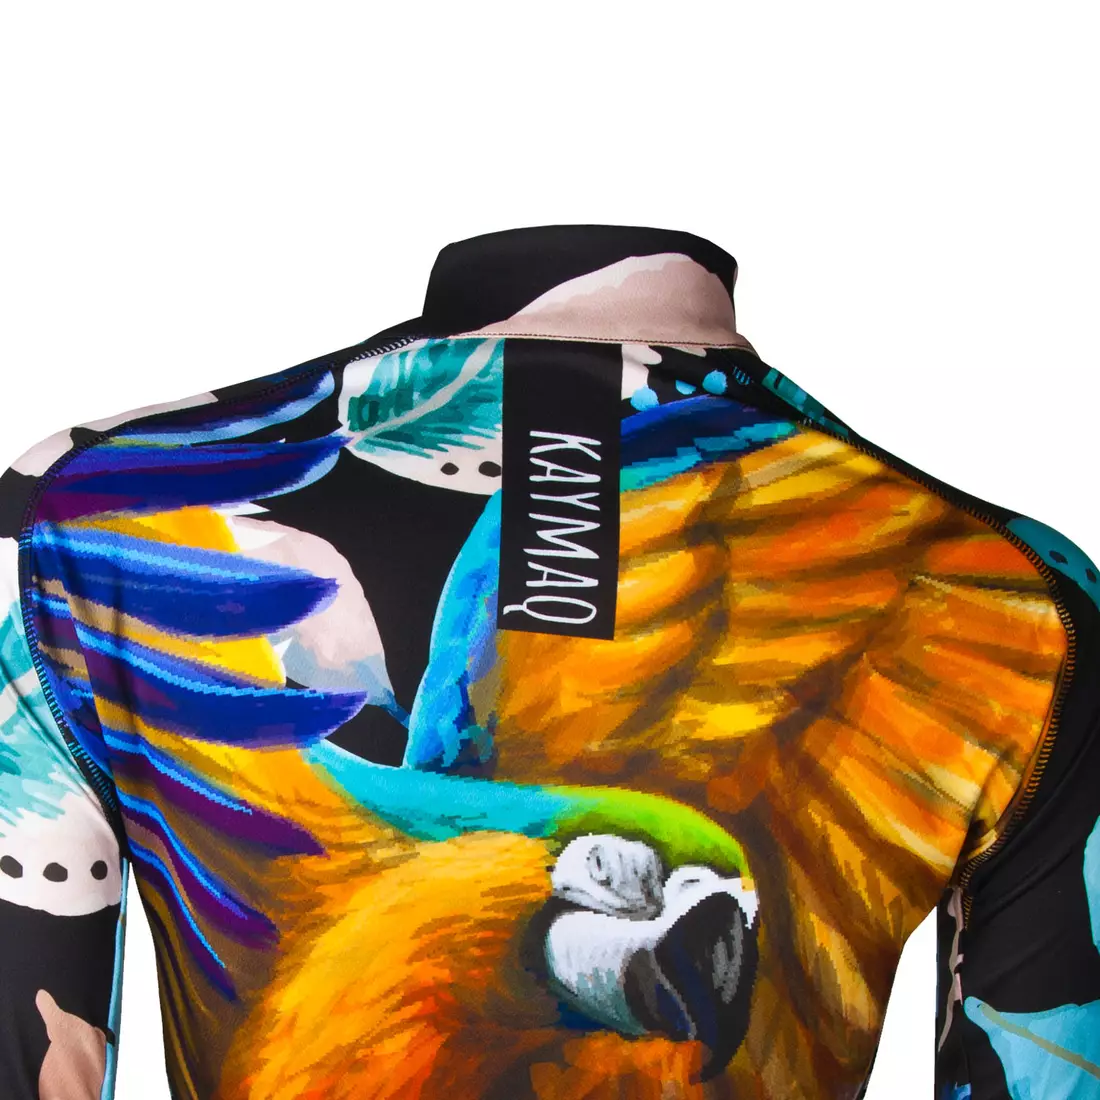 [Set] KAYMAQ DESIGN women's short-sleeved cycling jersey W28  + KAYMAQ DESIGN women's cycling jersey W28 